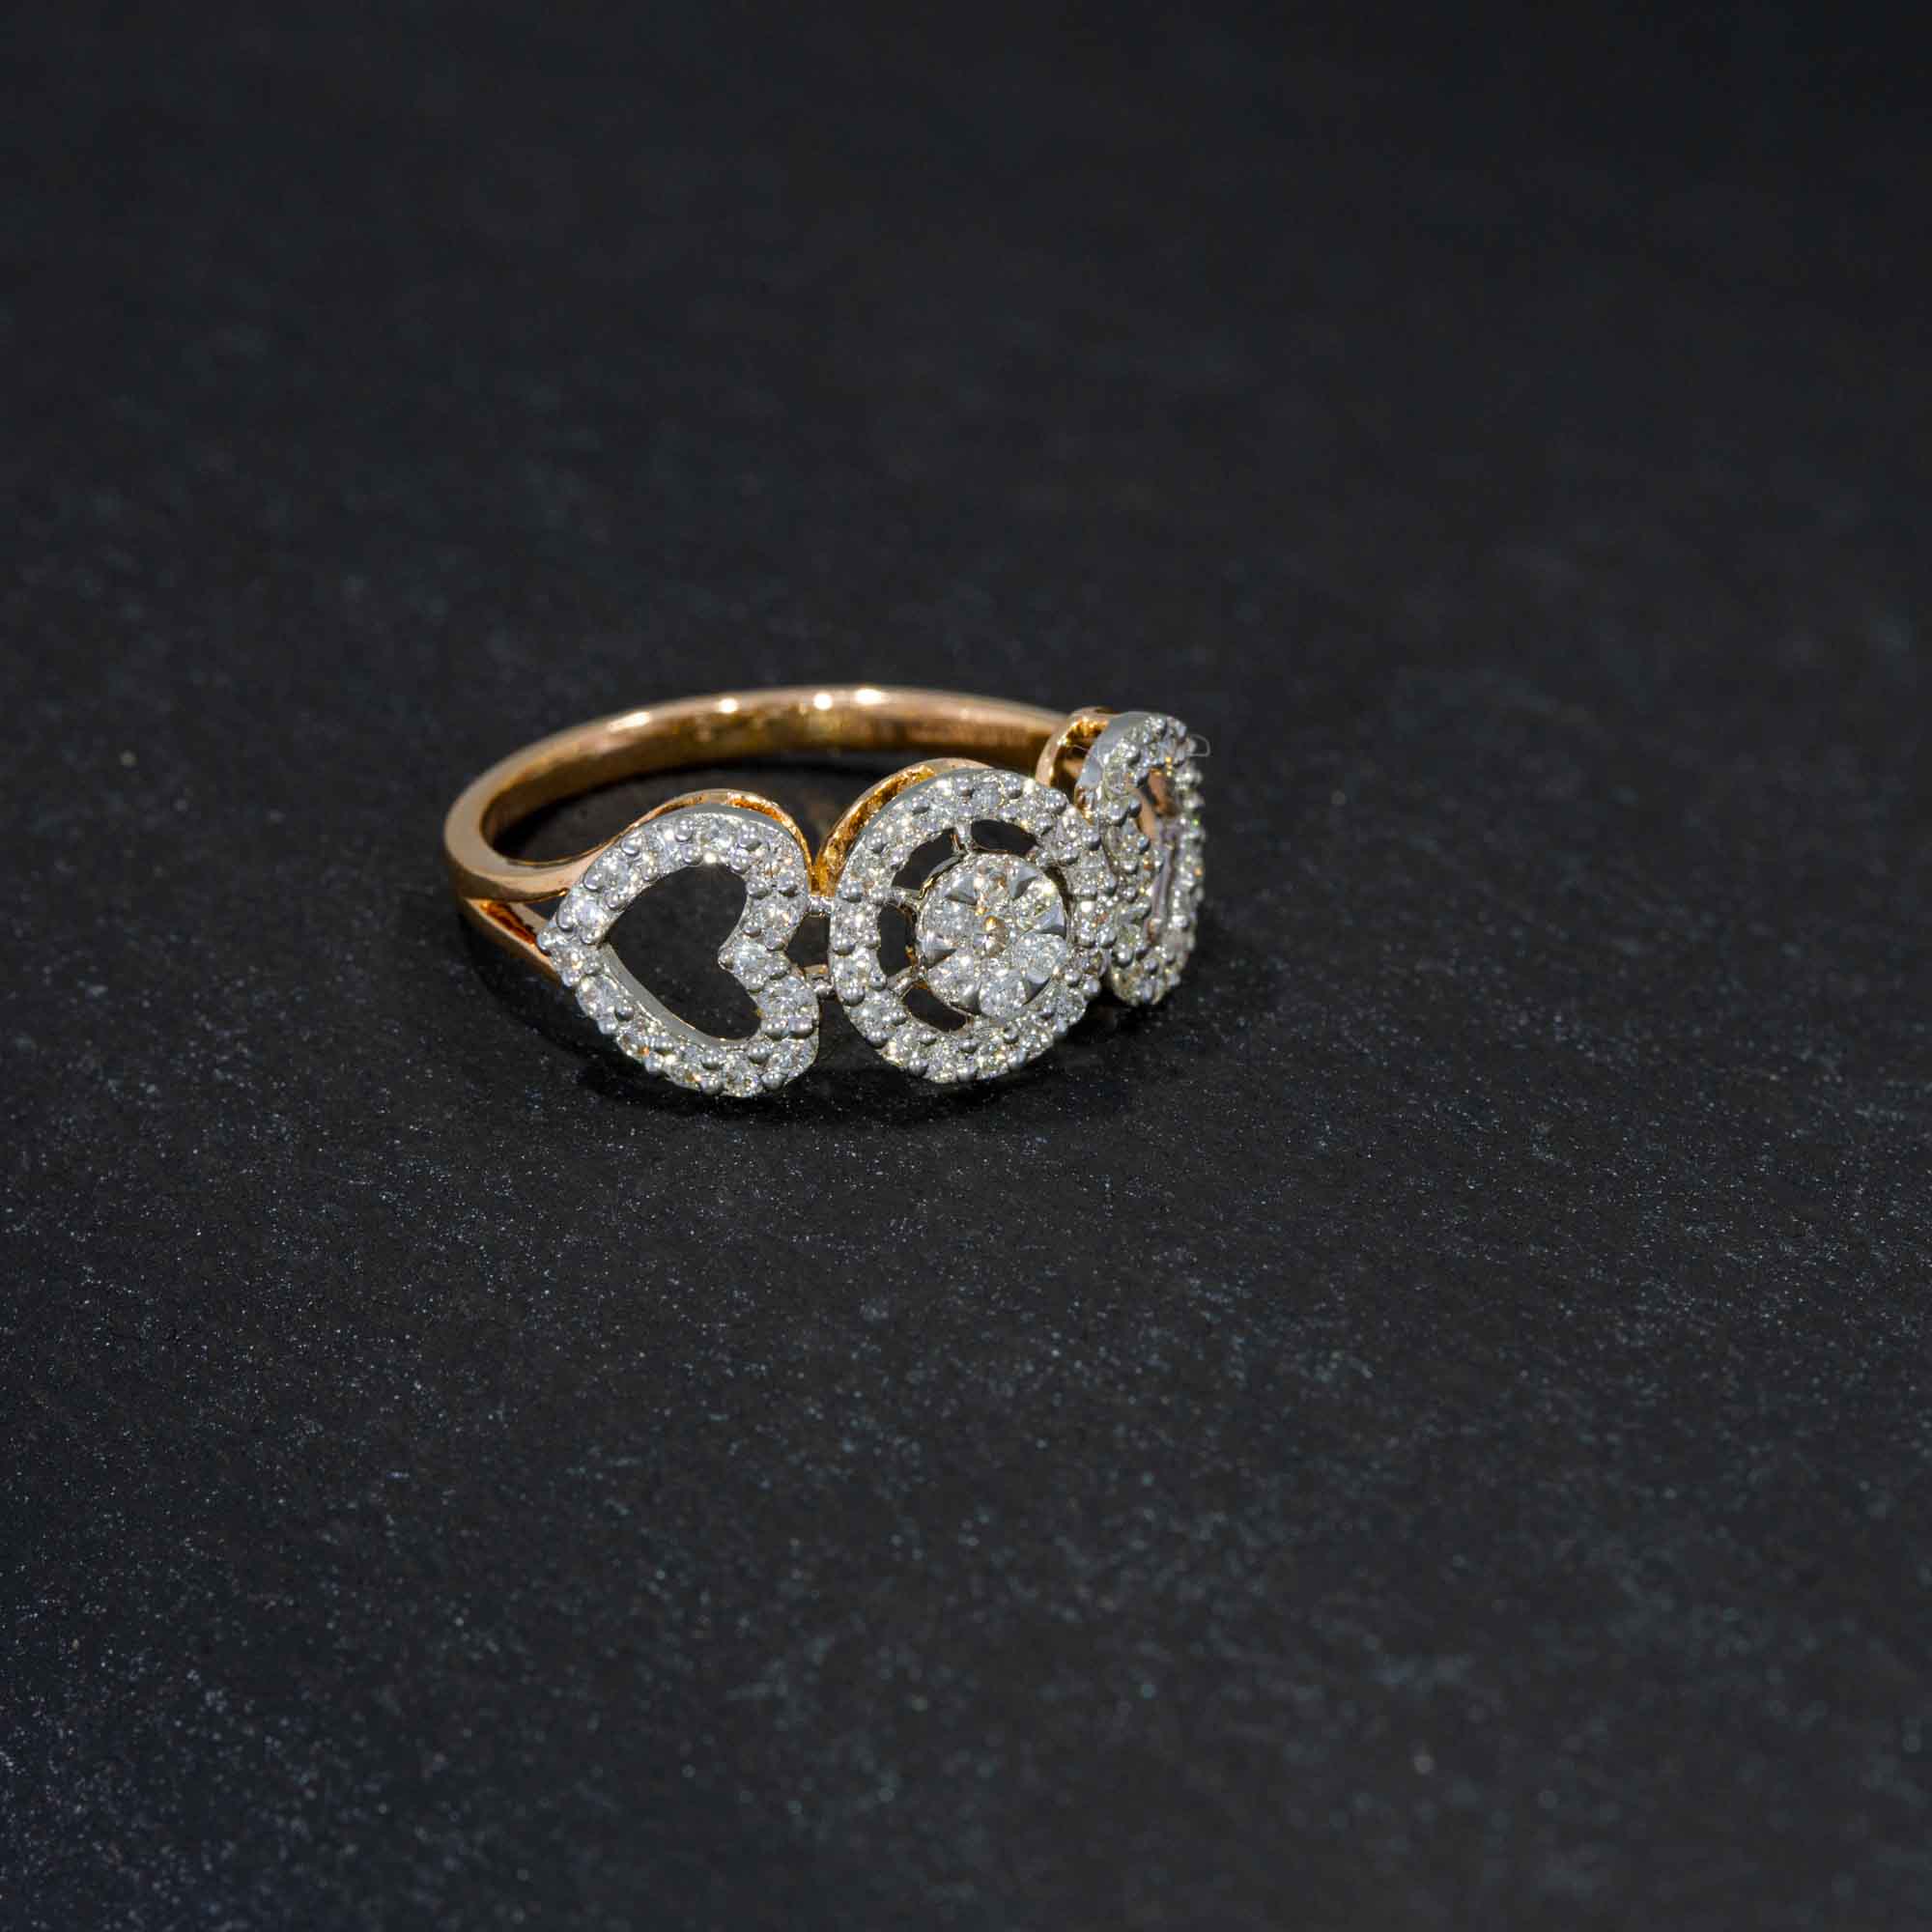 Bryan Beauties Rose Gold Right Hand Ring 147416 - Bryan Jewelry